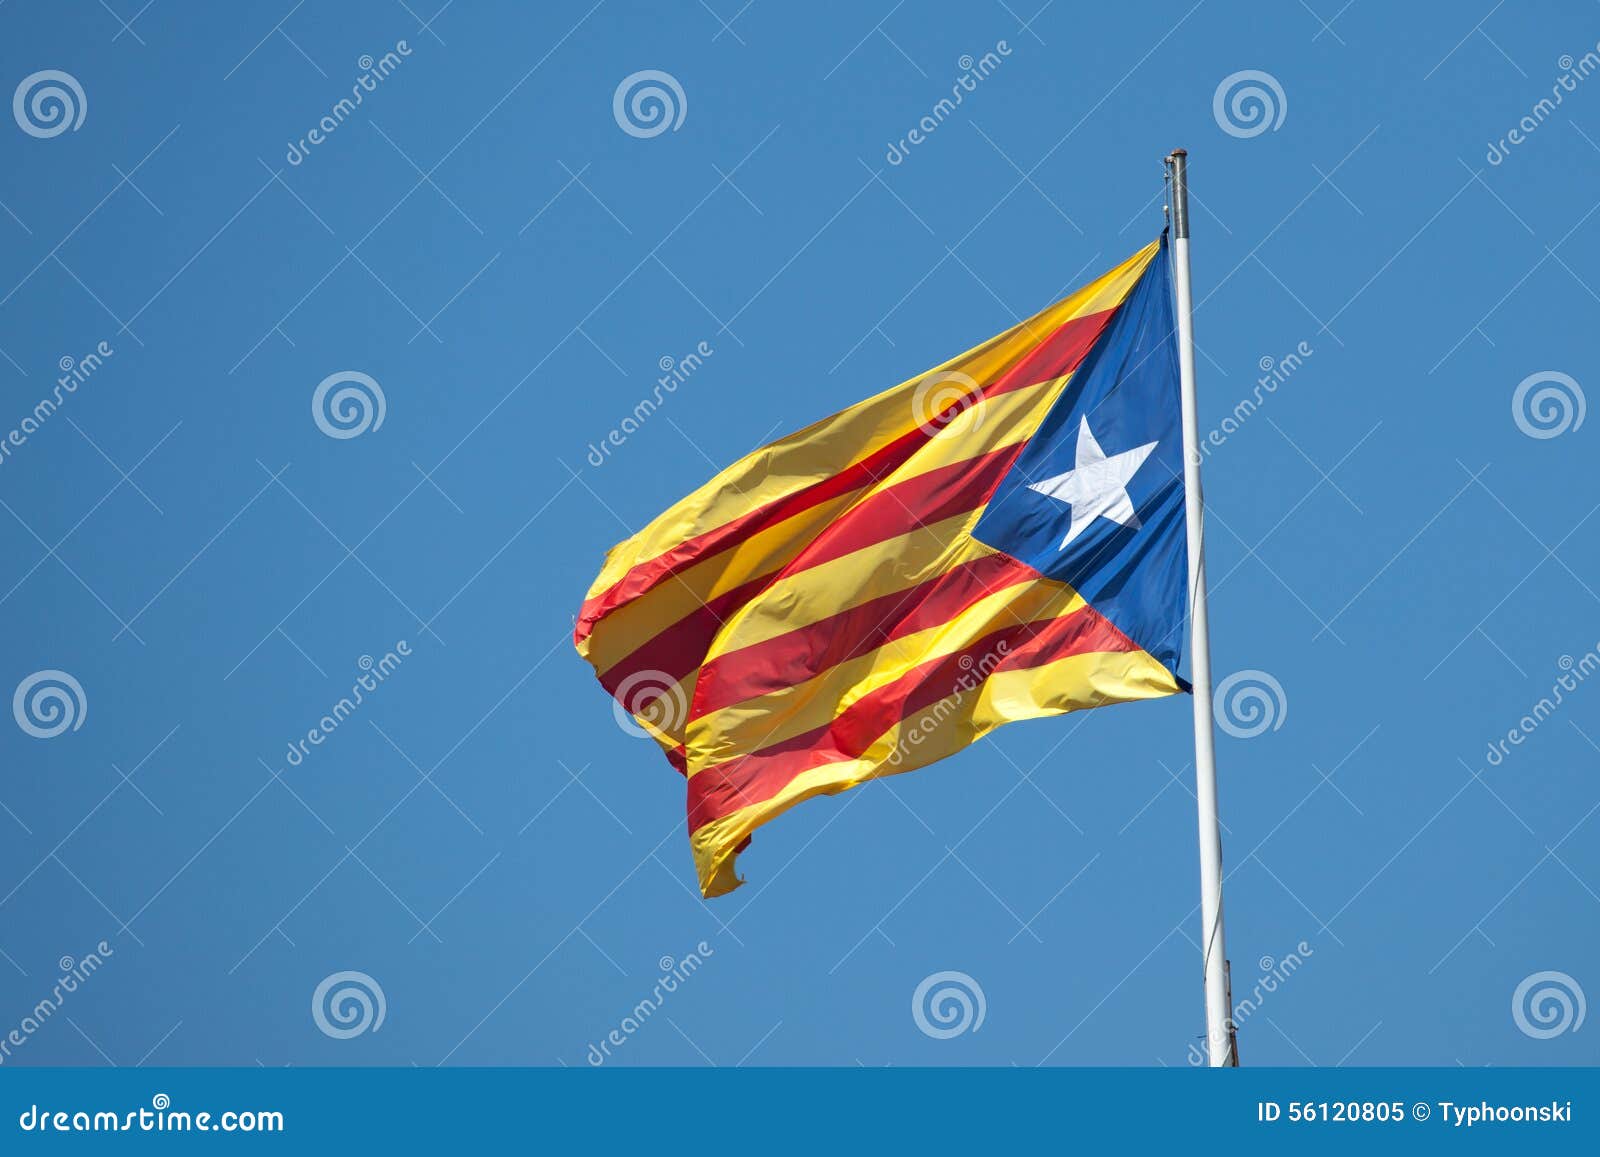 Flag of Catalonia stock image. Image of spain, catalonia - 56120805